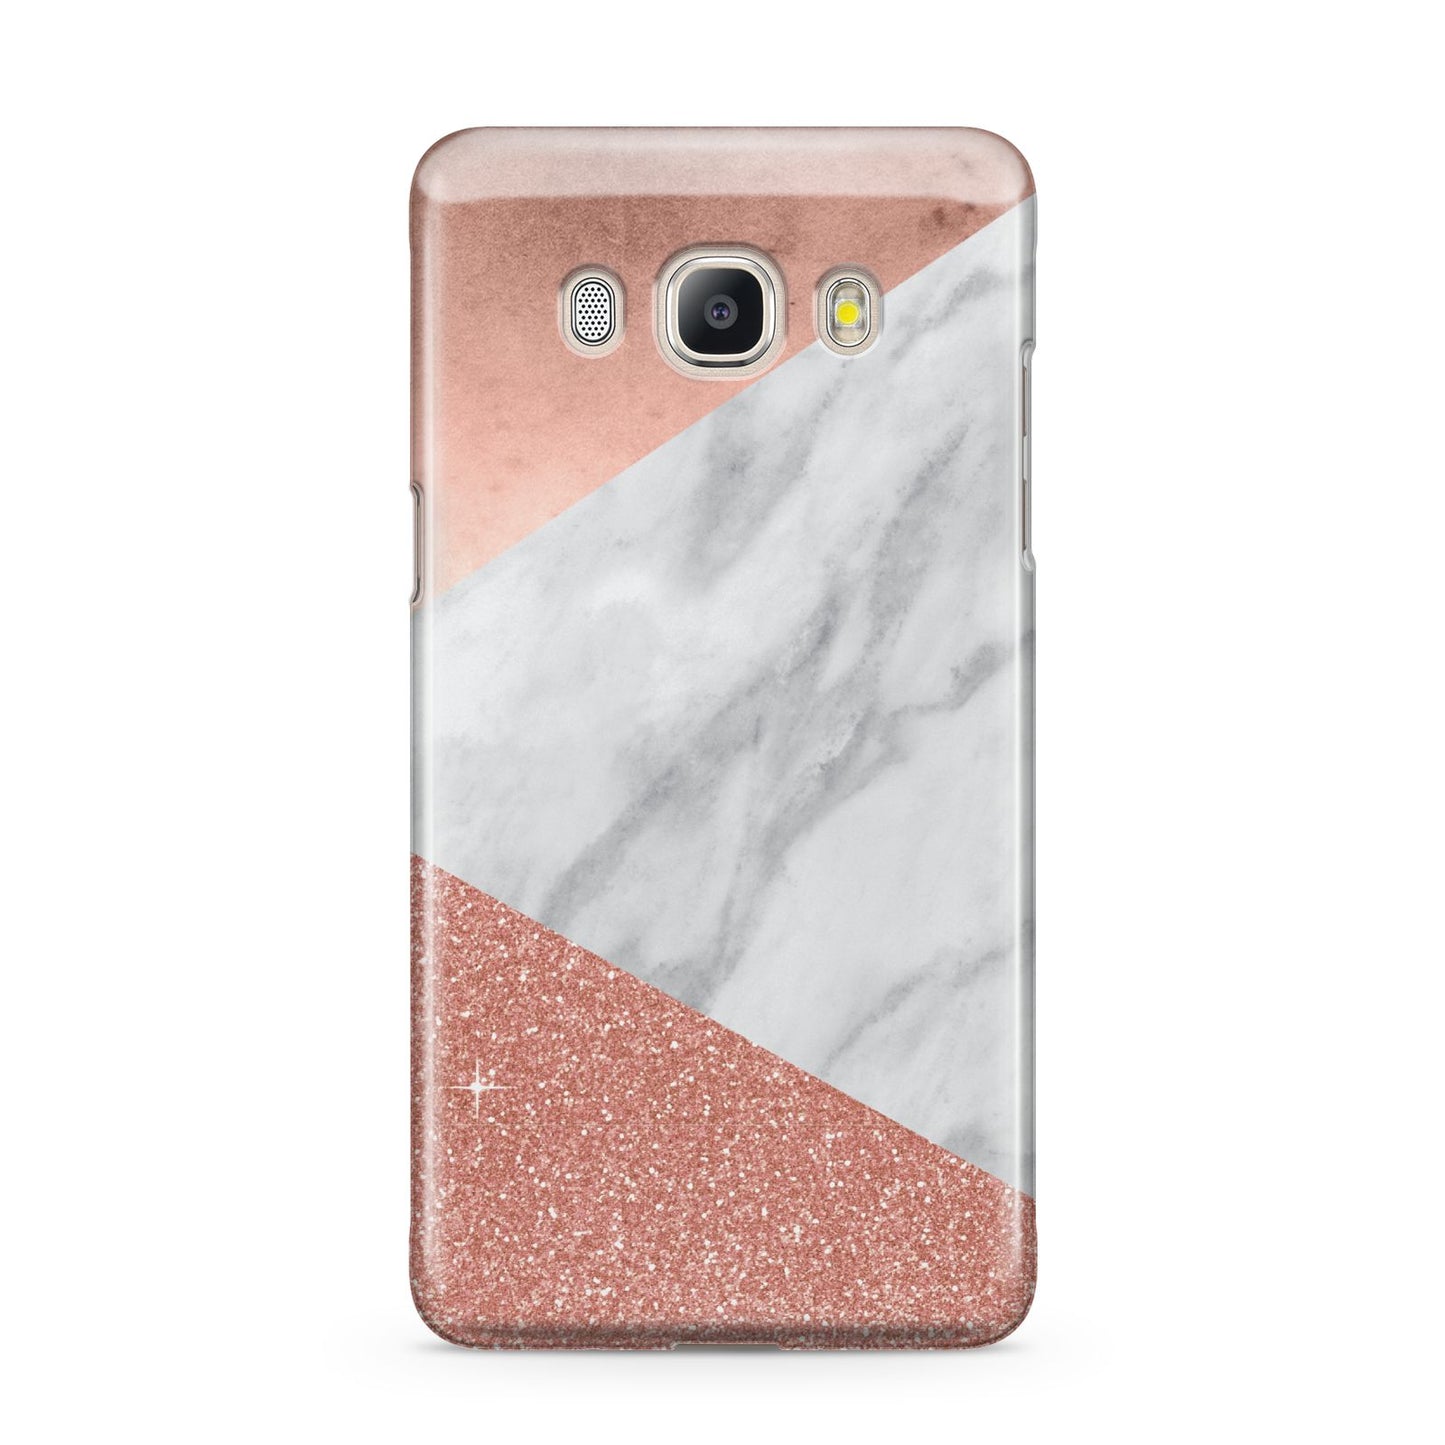 Marble Rose Gold Foil Samsung Galaxy J5 2016 Case